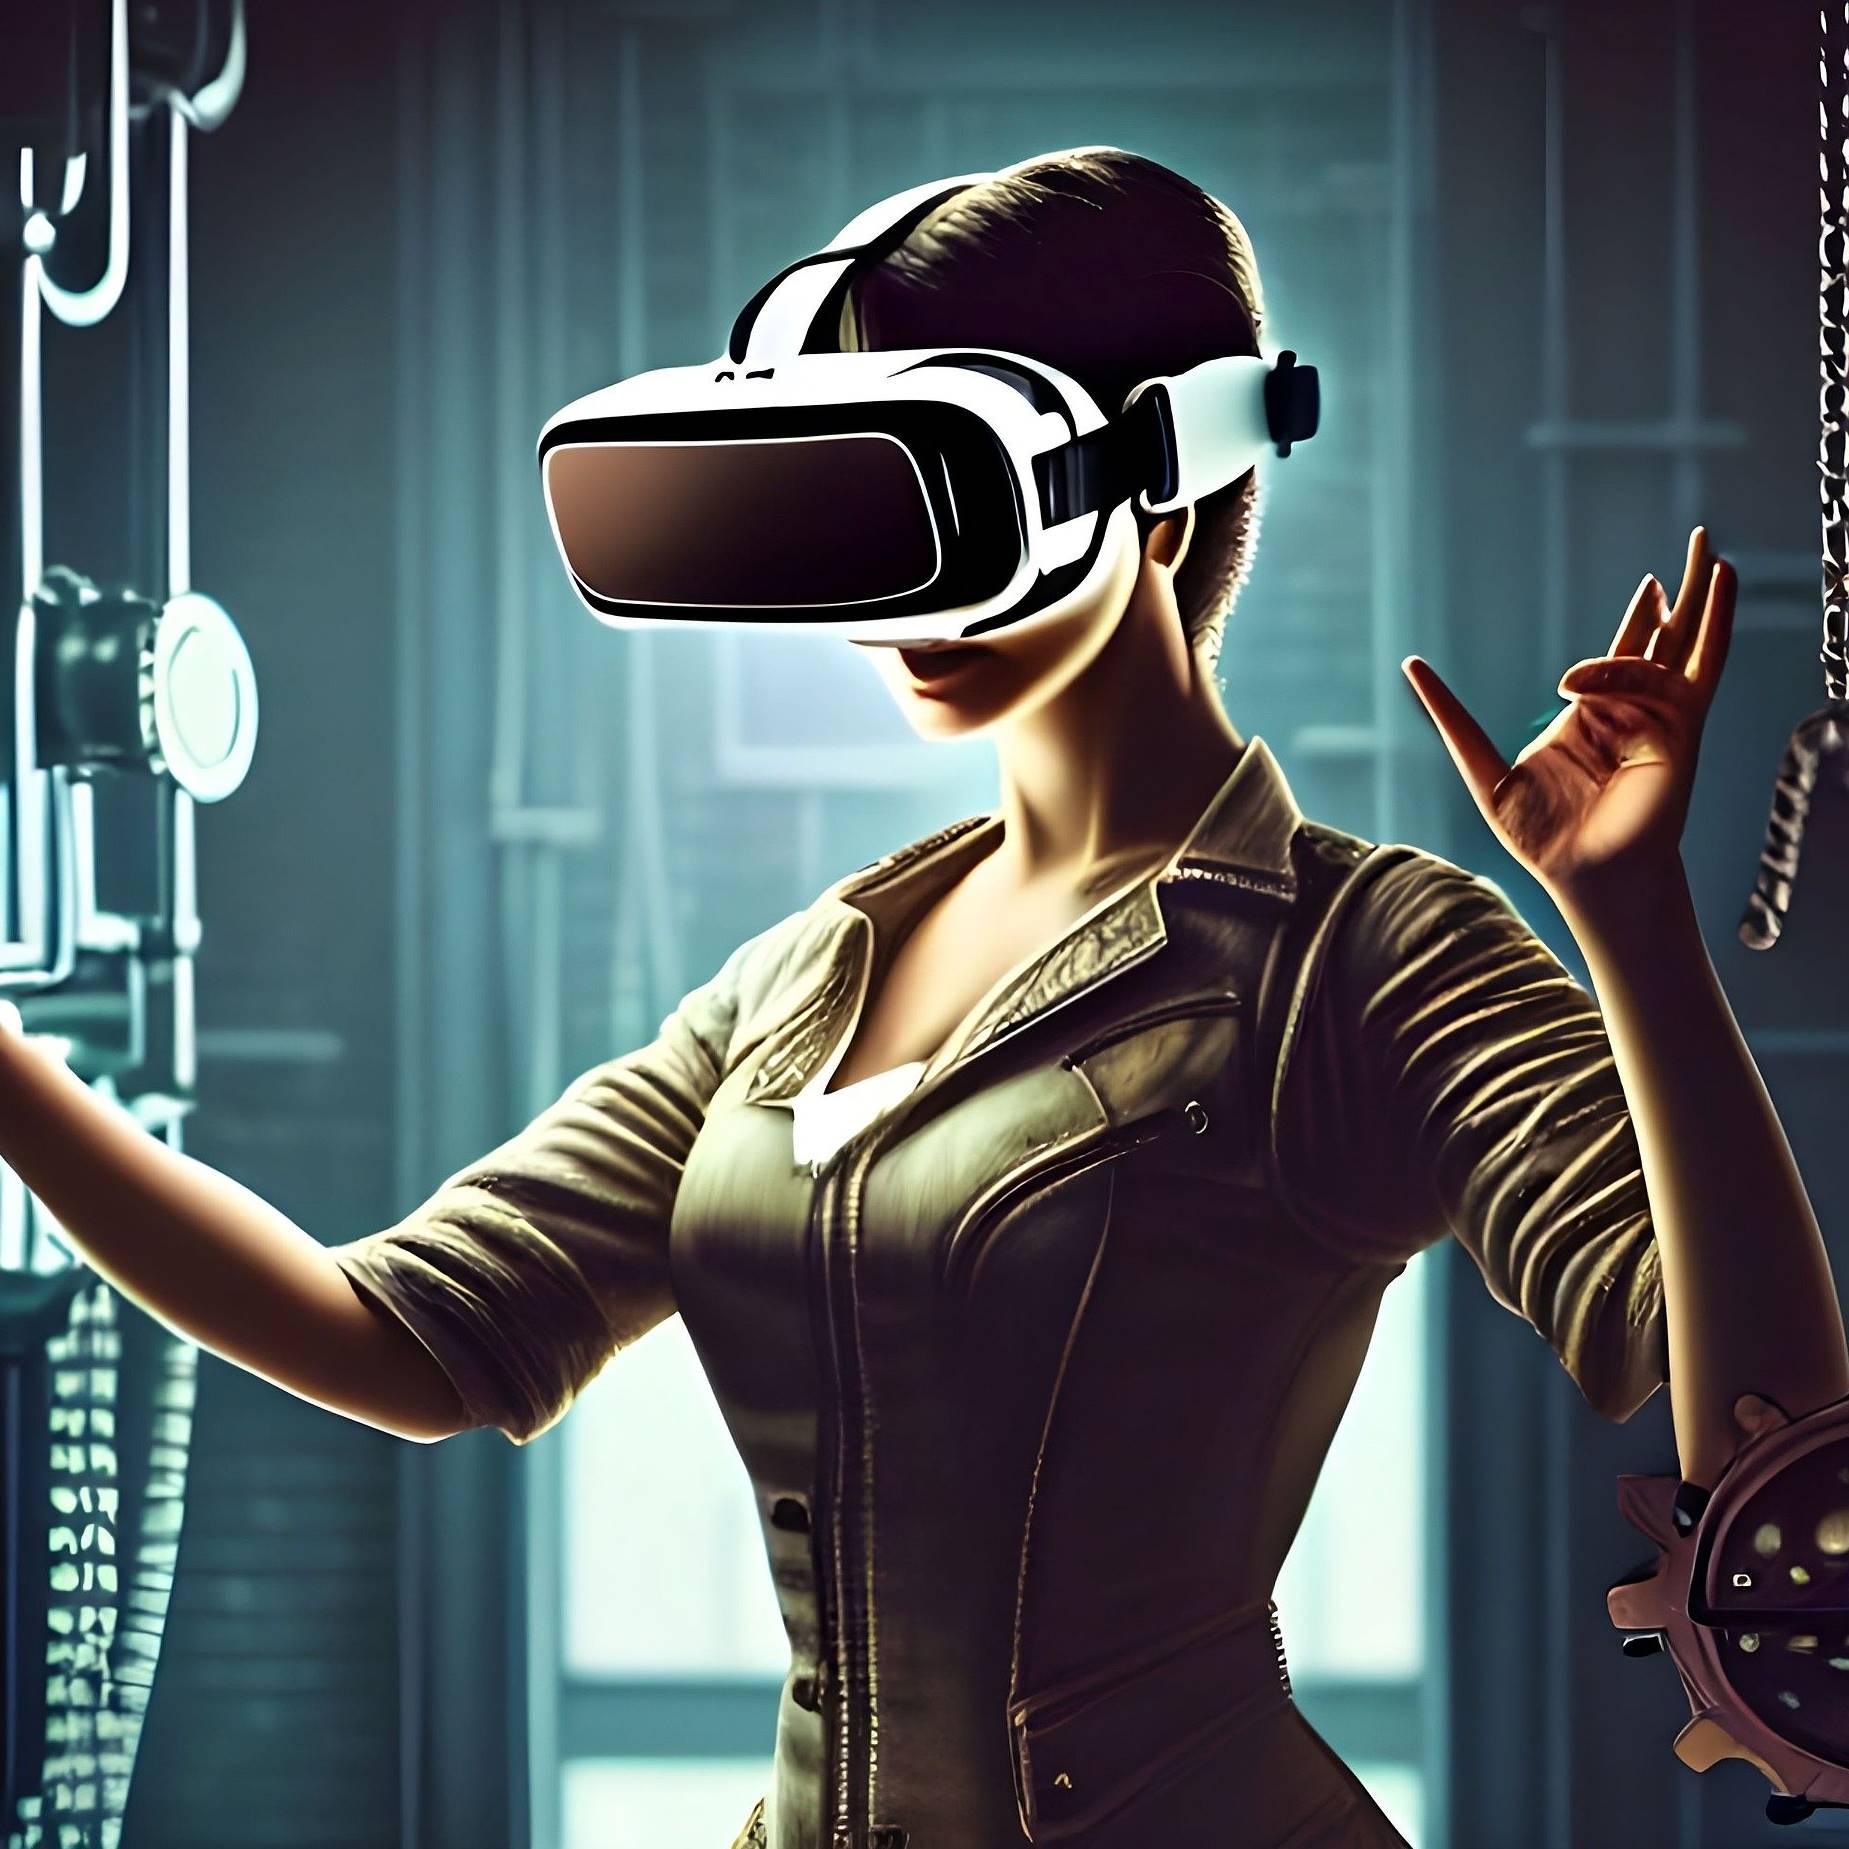 Experiență VR Cadou - Inchiriere ochelari VR  | 3 zile, 1 echipament , smartexperience.ro